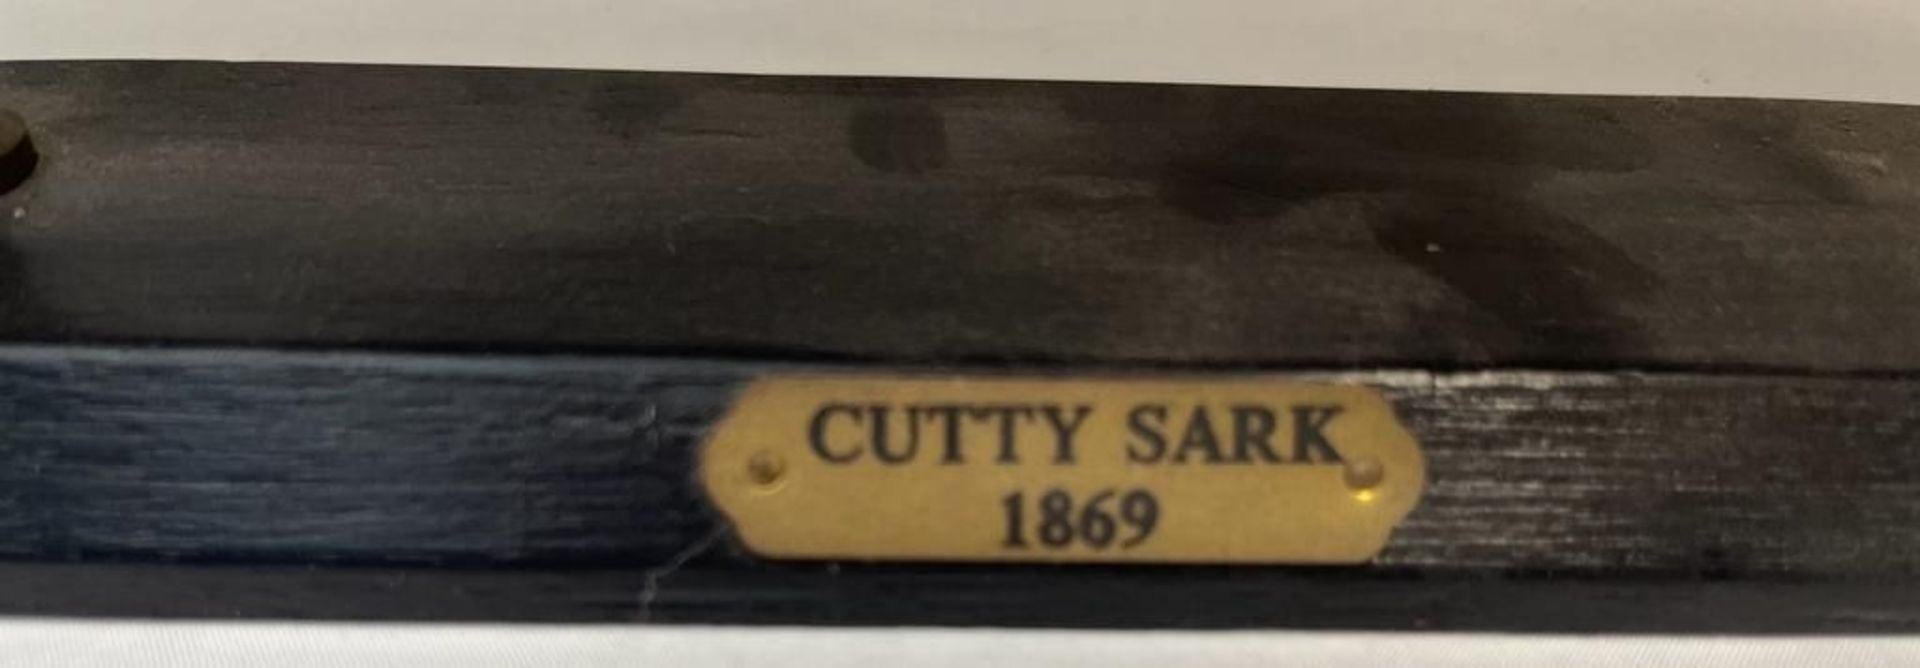 Schiffmodell "Cutty Sark" - Image 2 of 3